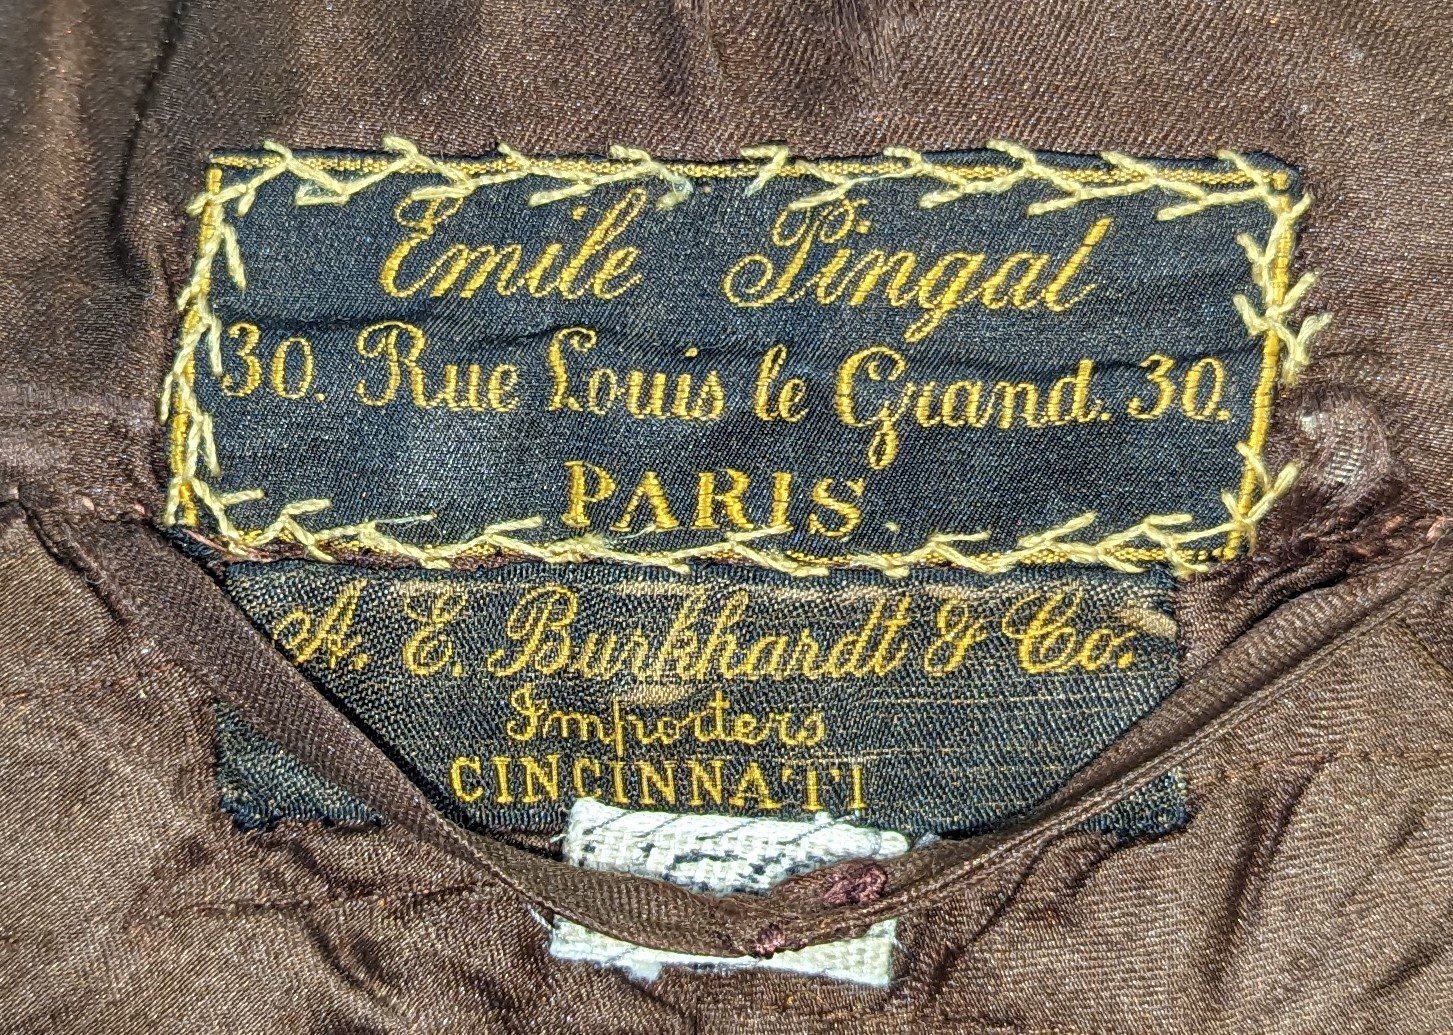 Emile Pingat designer label and Burkhardt store label